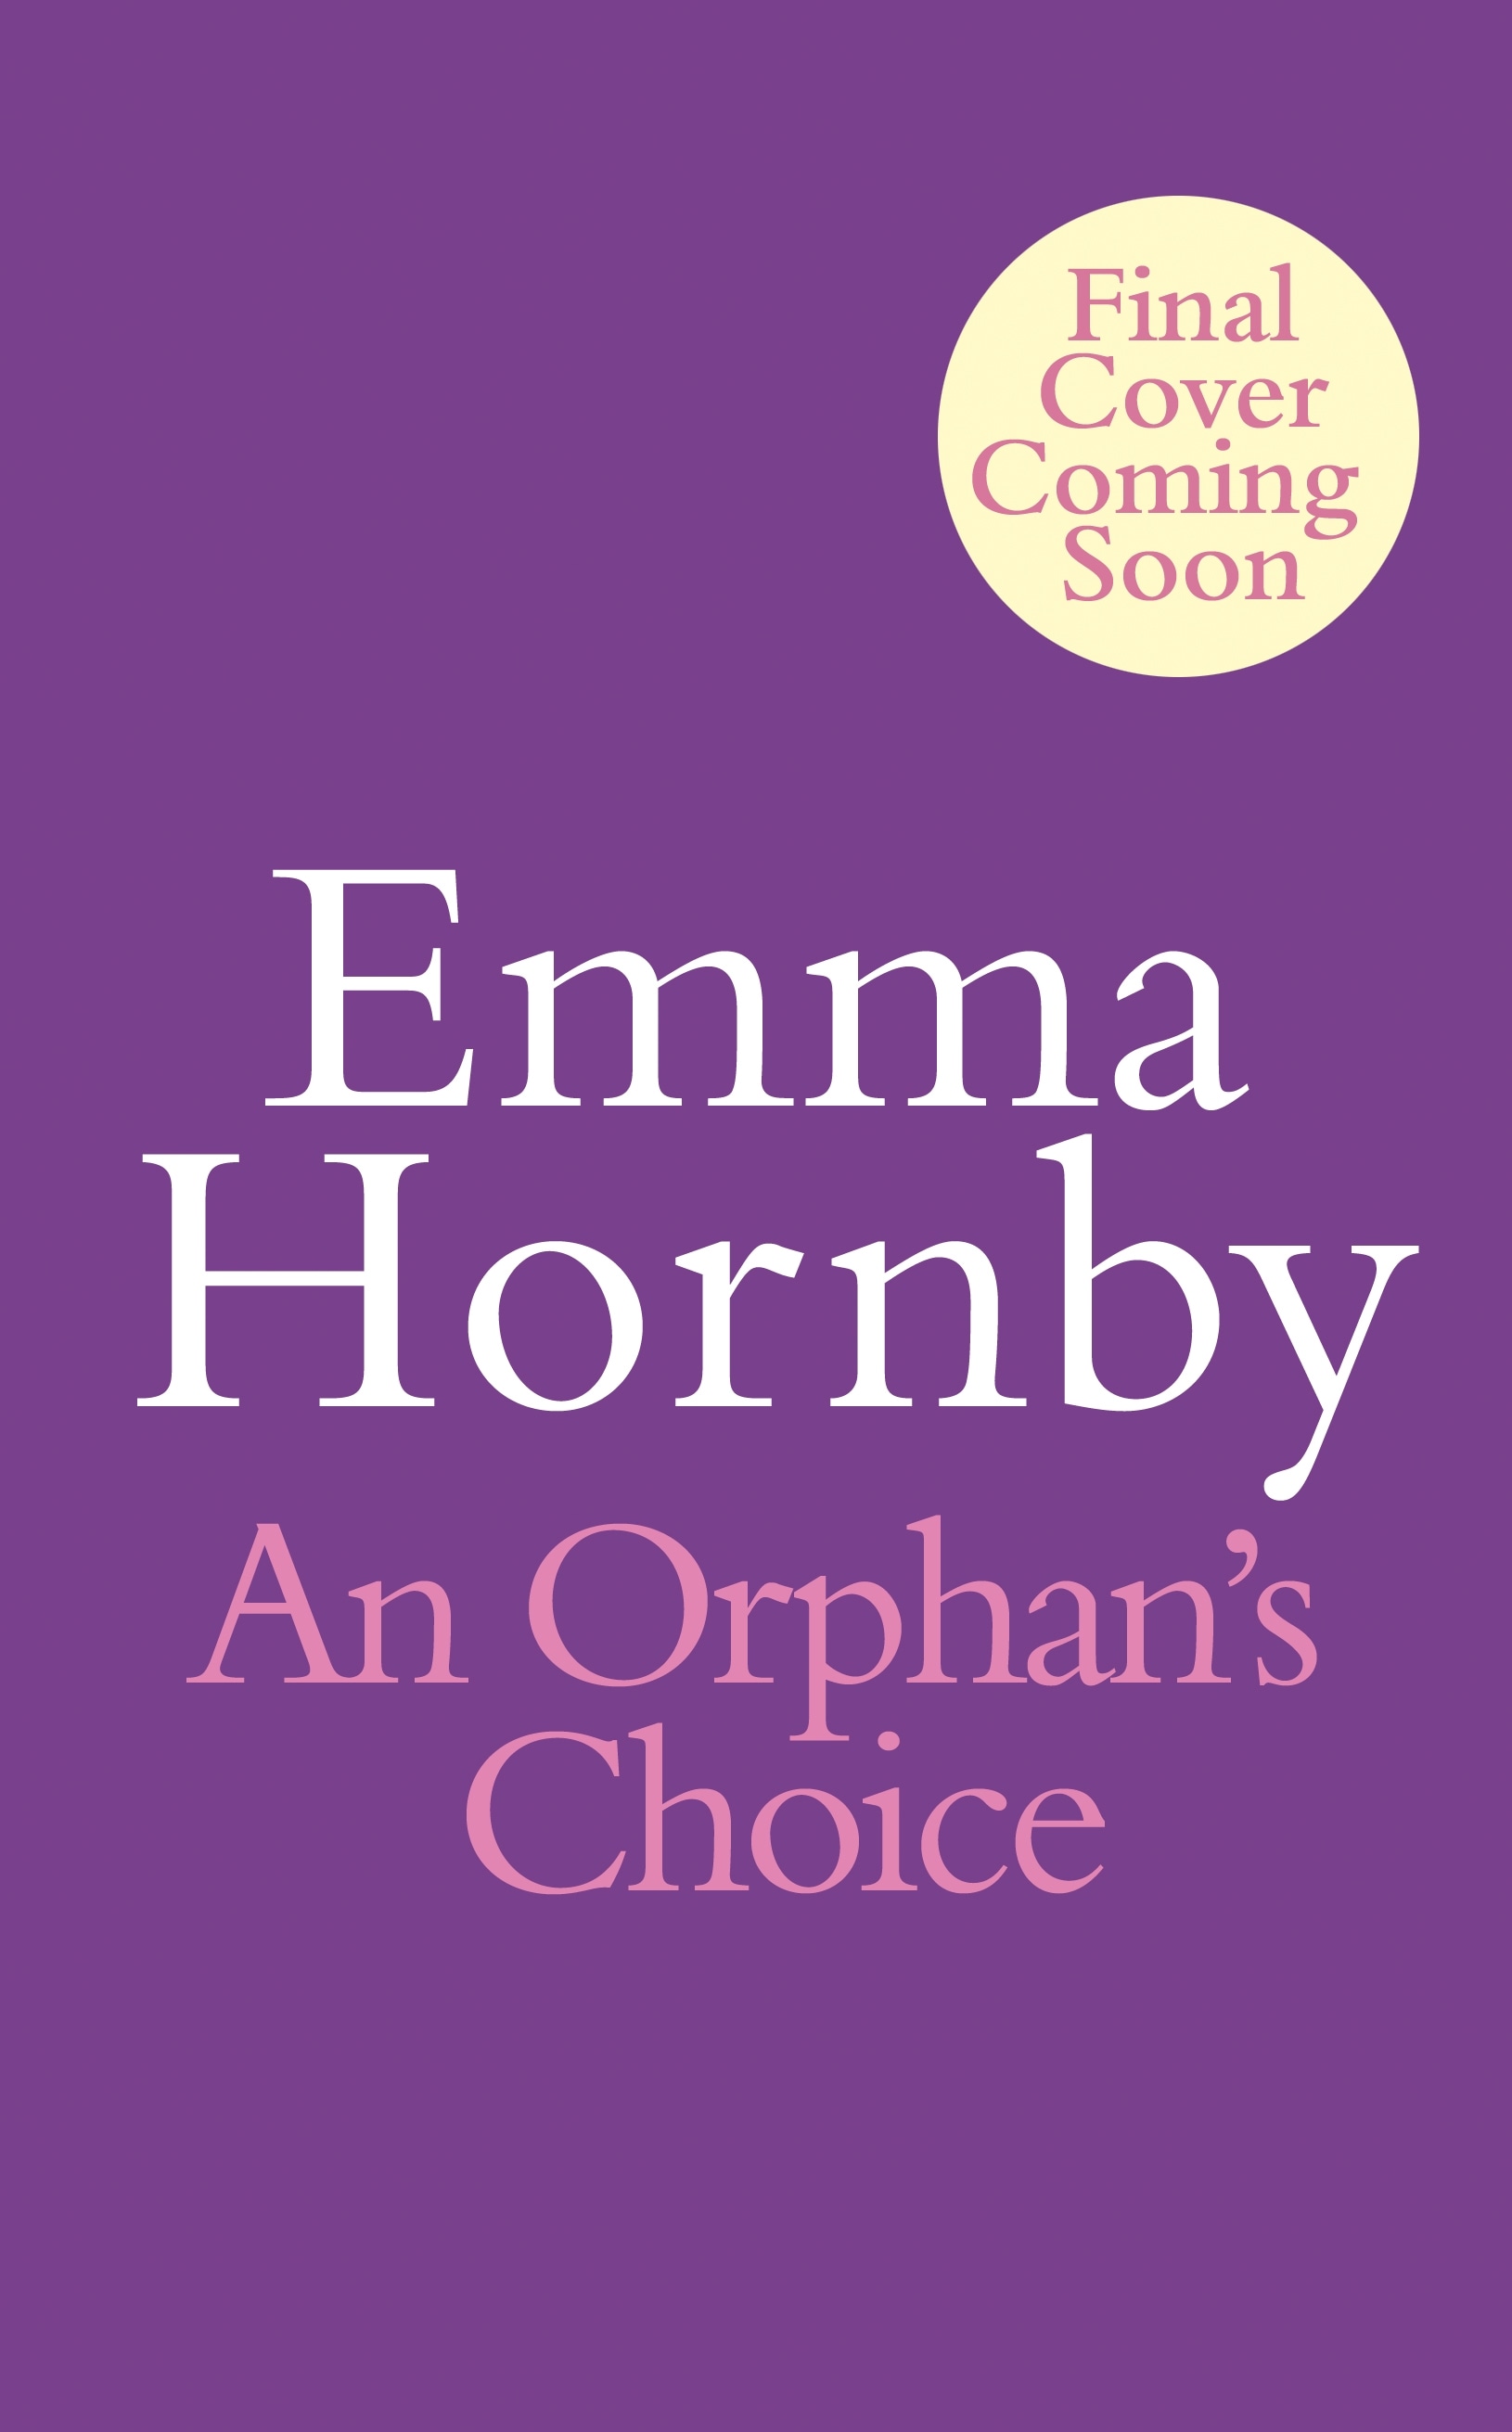 Book “An Orphan's Choice” by Emma Hornby — March 30, 2023